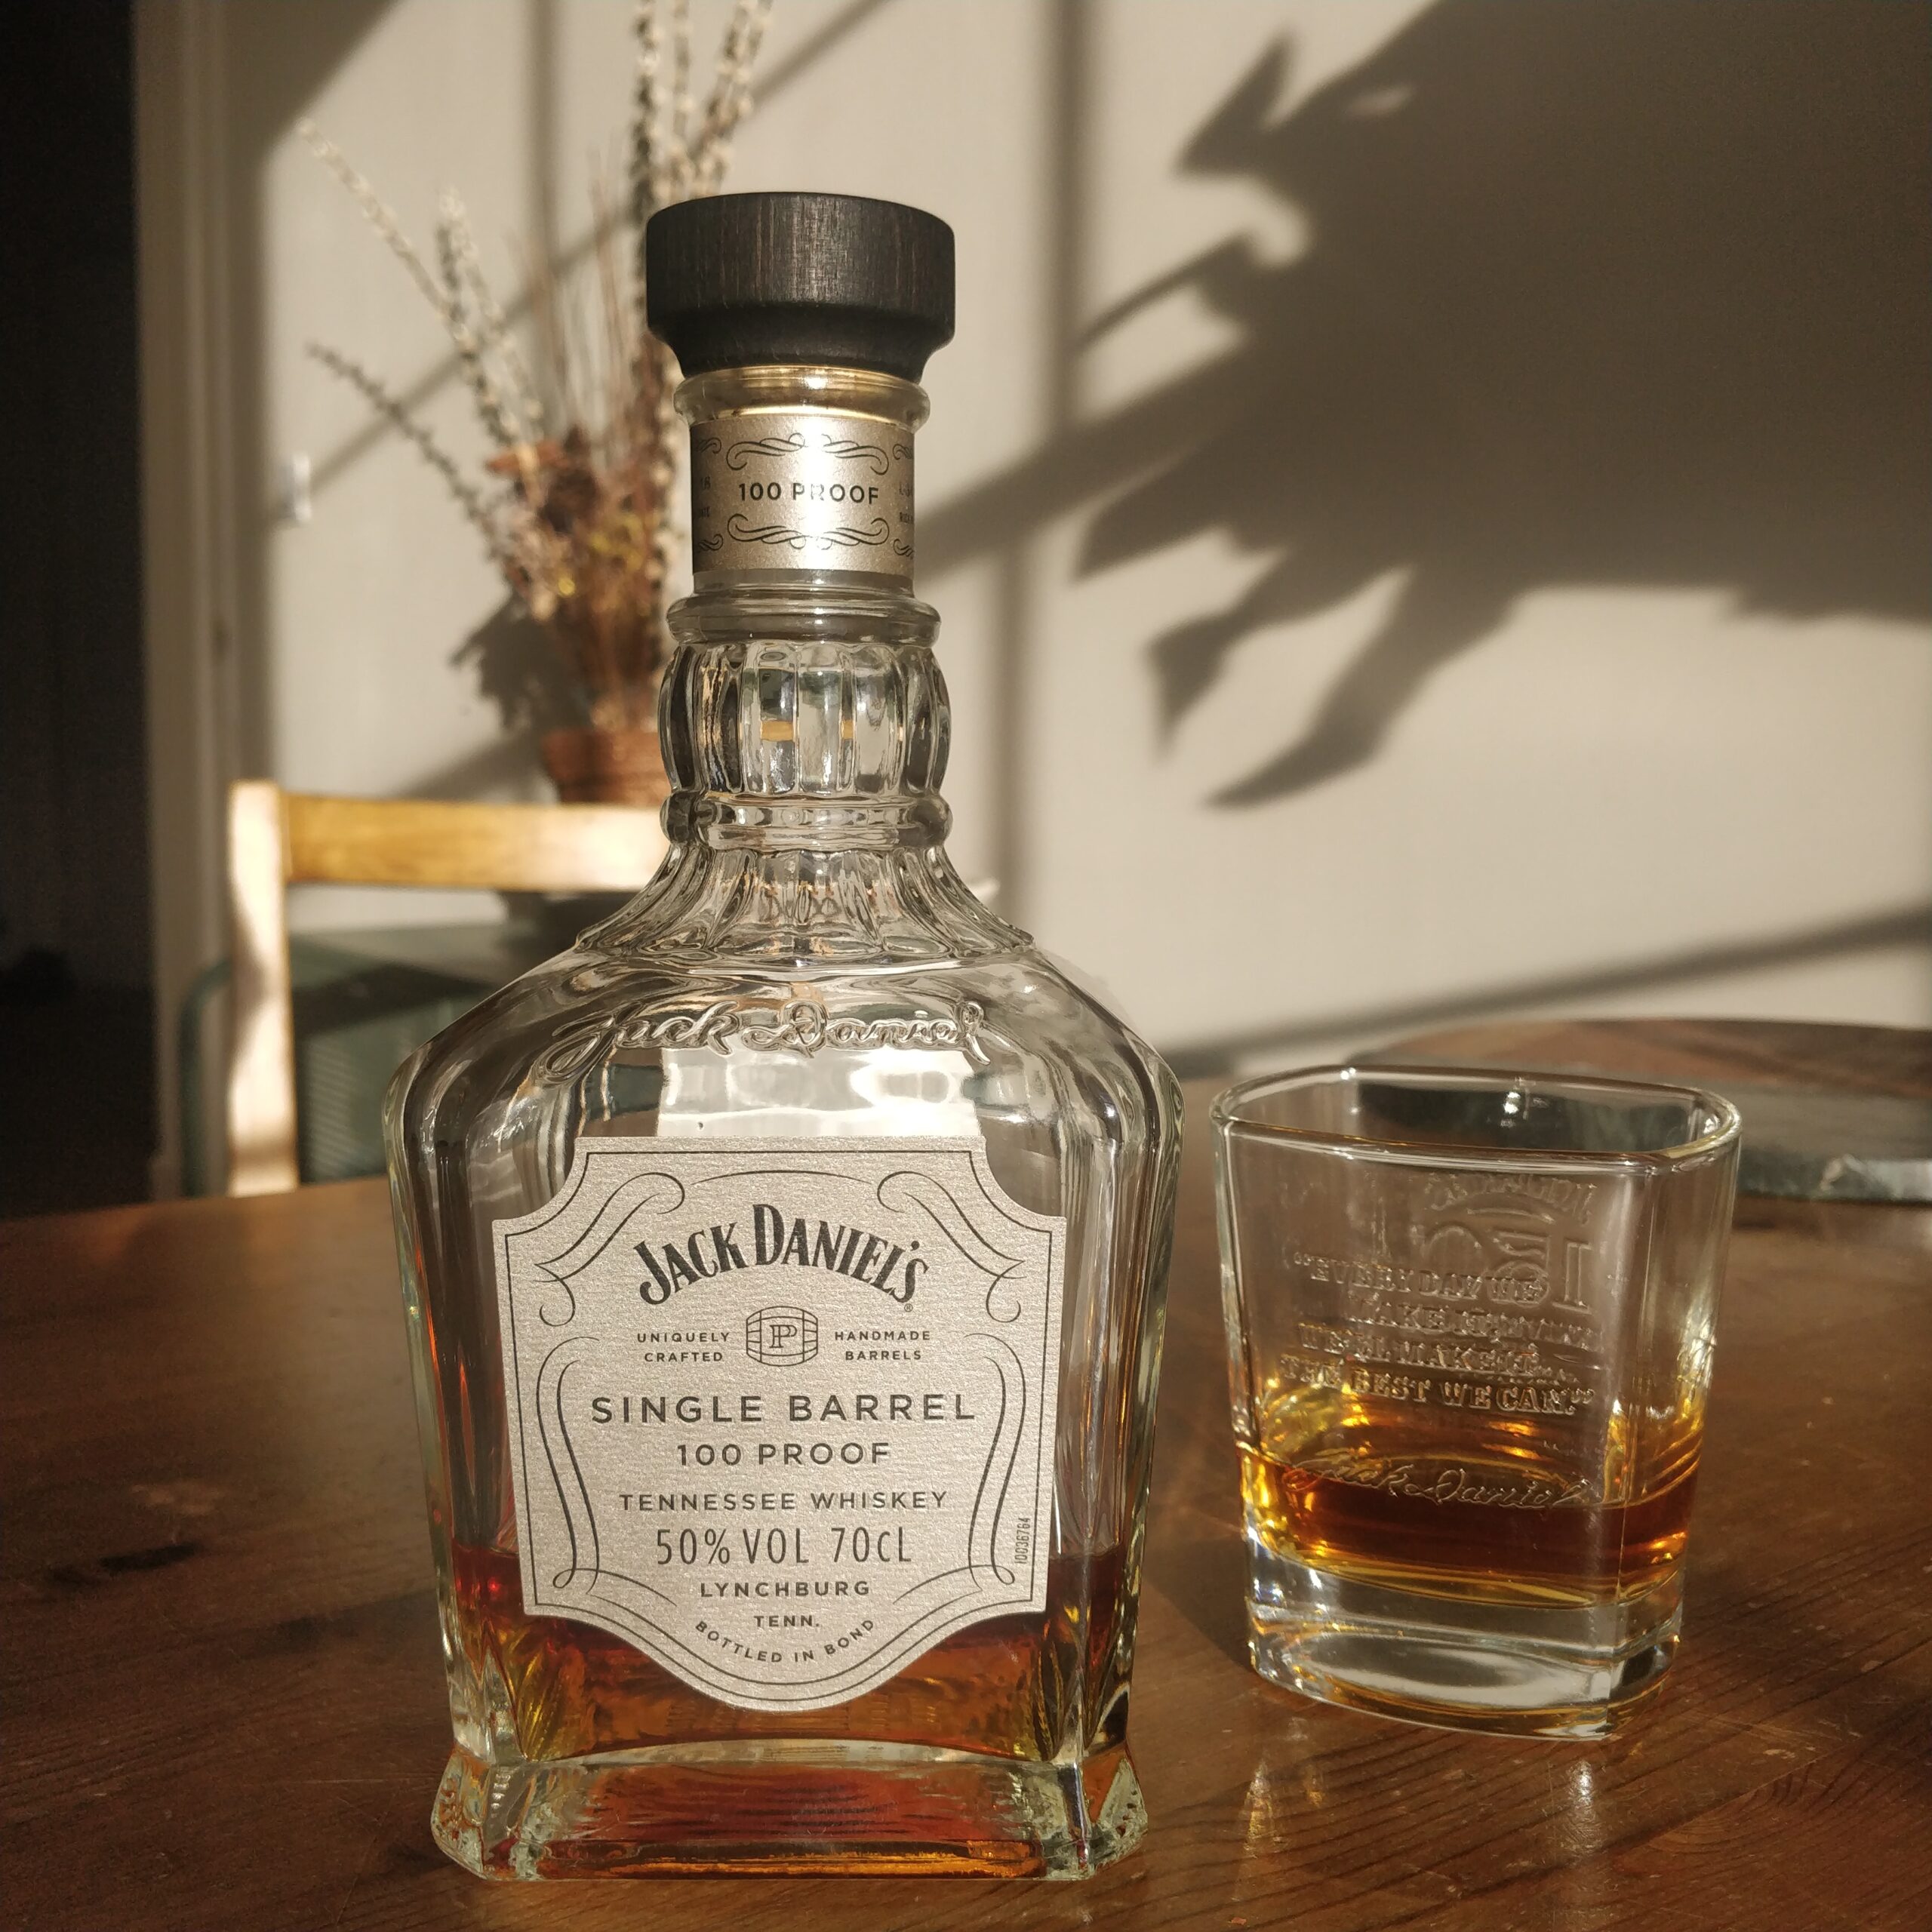 Jack Daniels single barrel 100 proof